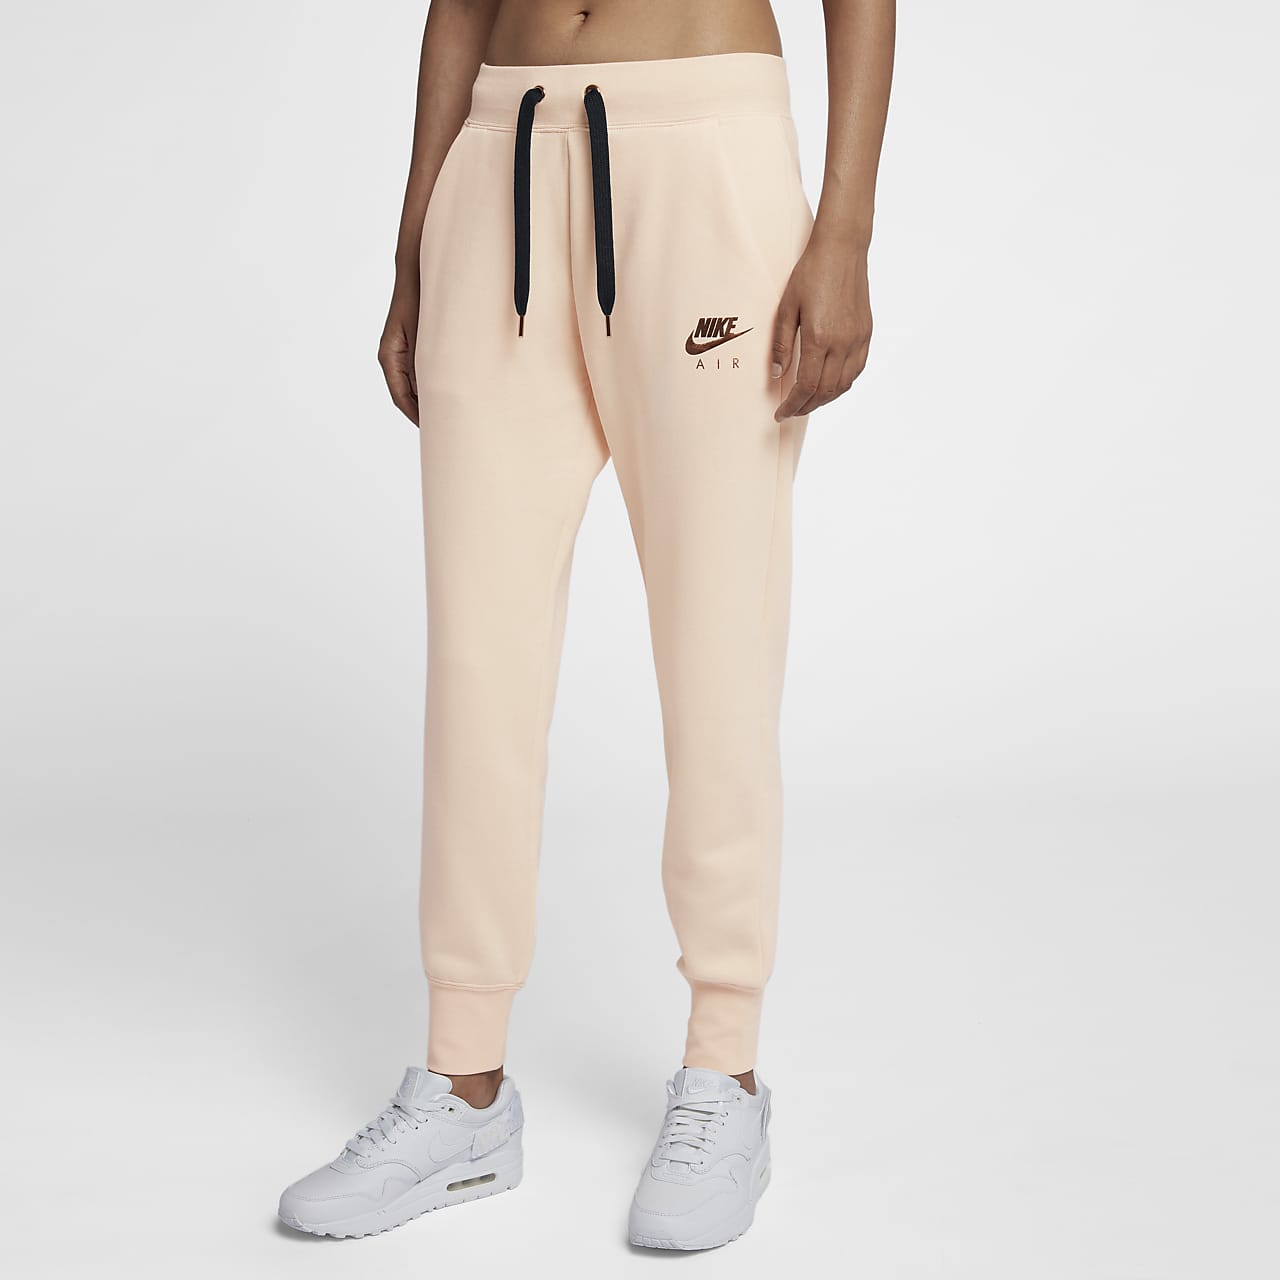 Pantaloni metallizzati in fleece Nike Air - Donna